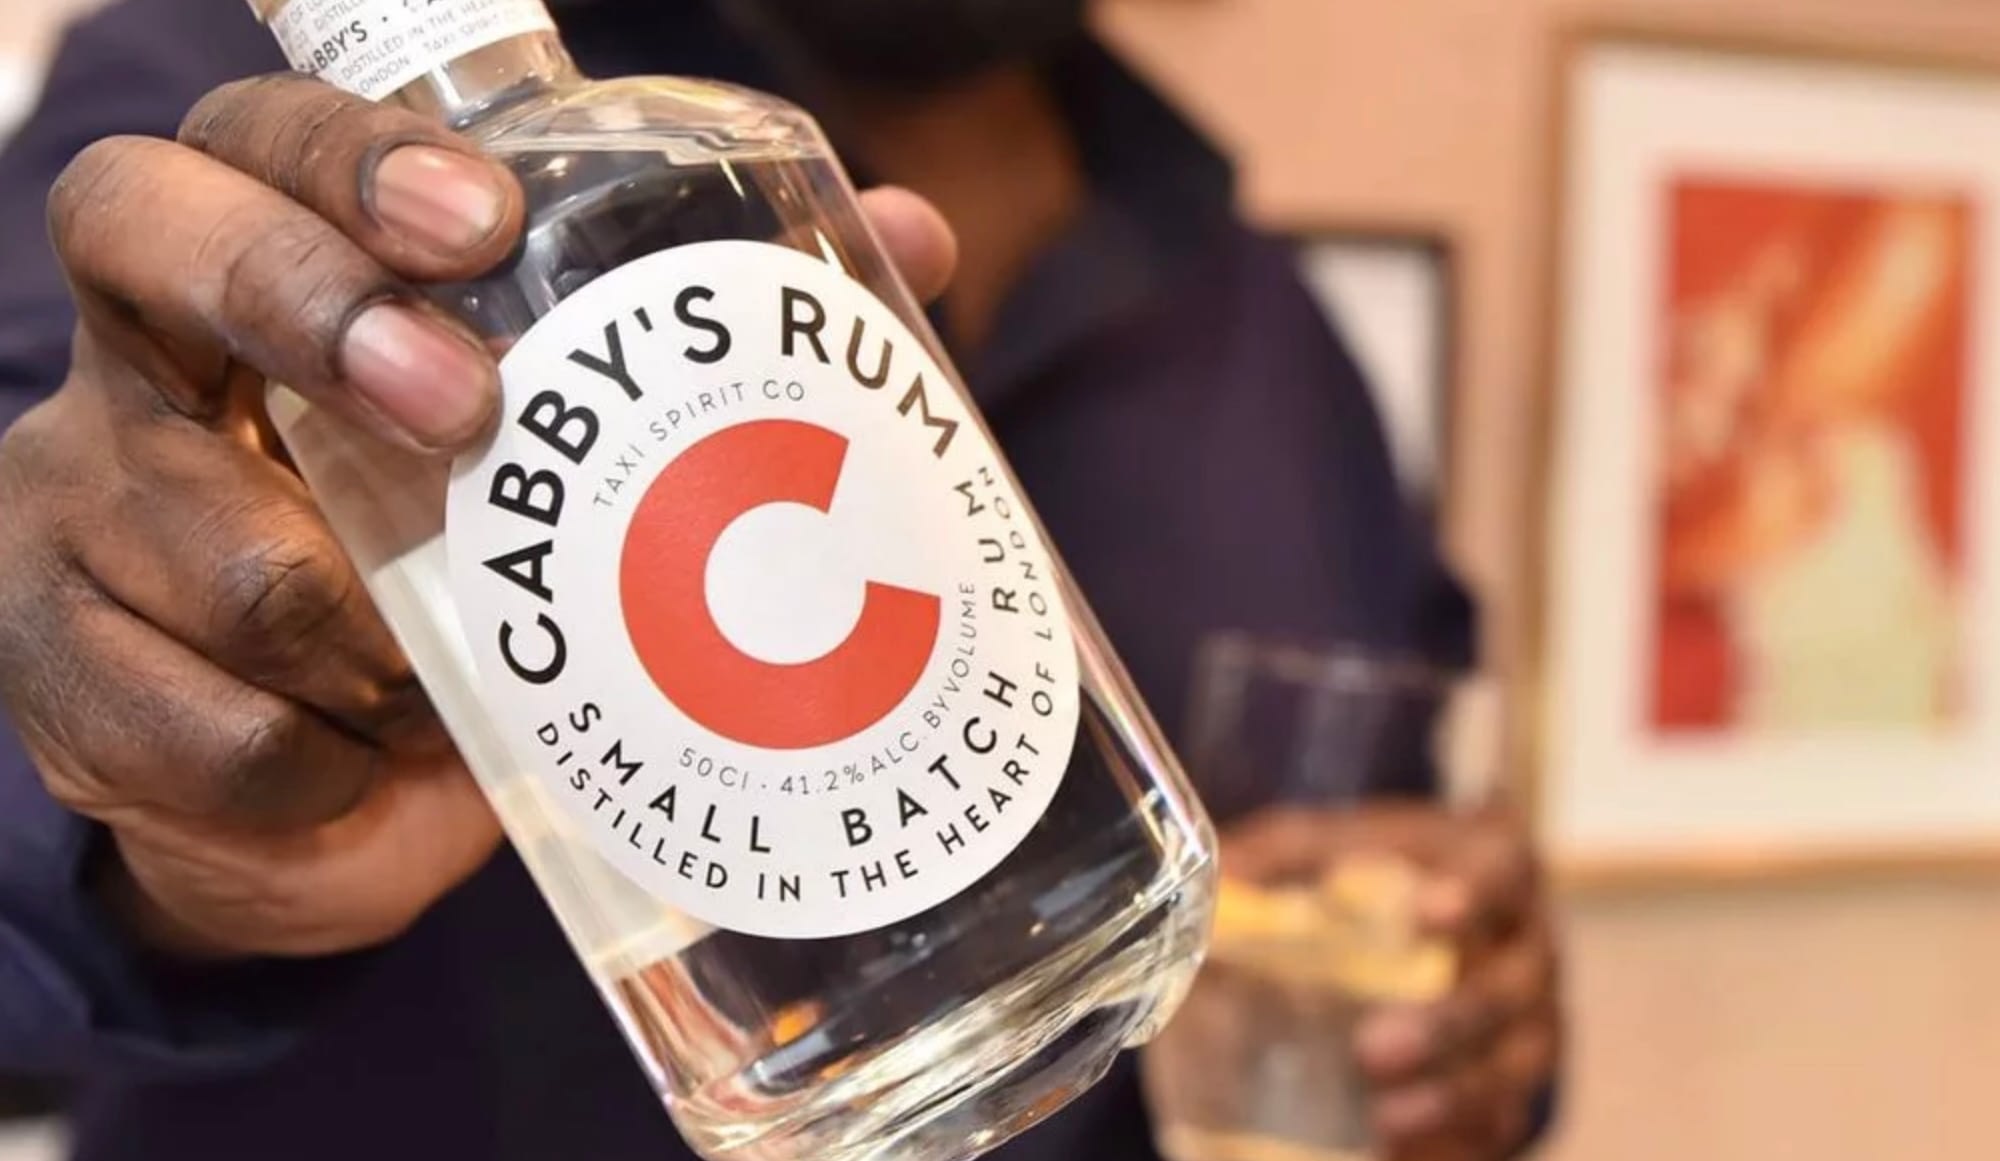 Cabby's Rum bottle in hand